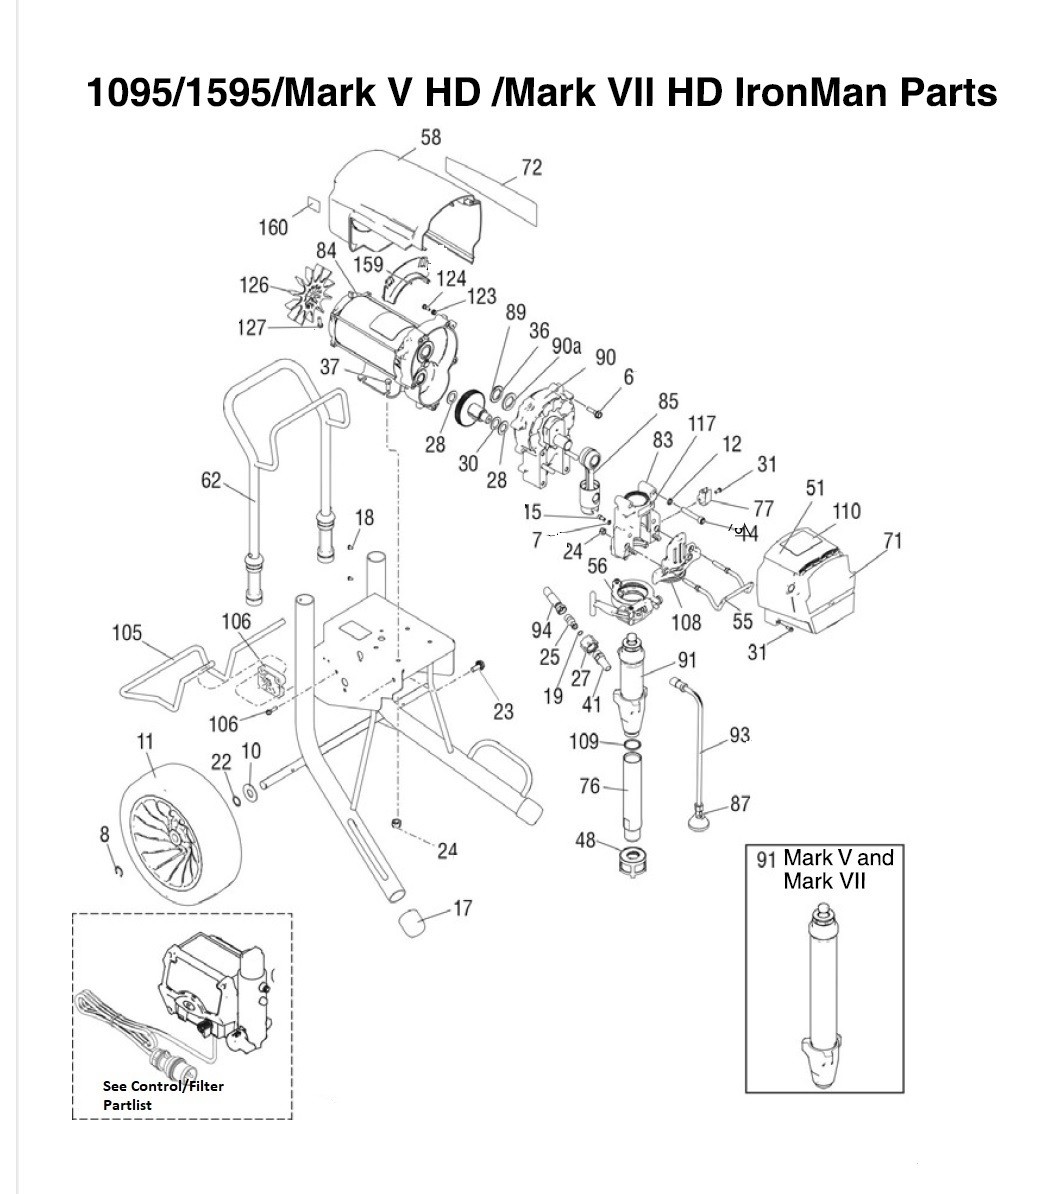 Graco Mark VII HD IronMan Sprayer Parts List